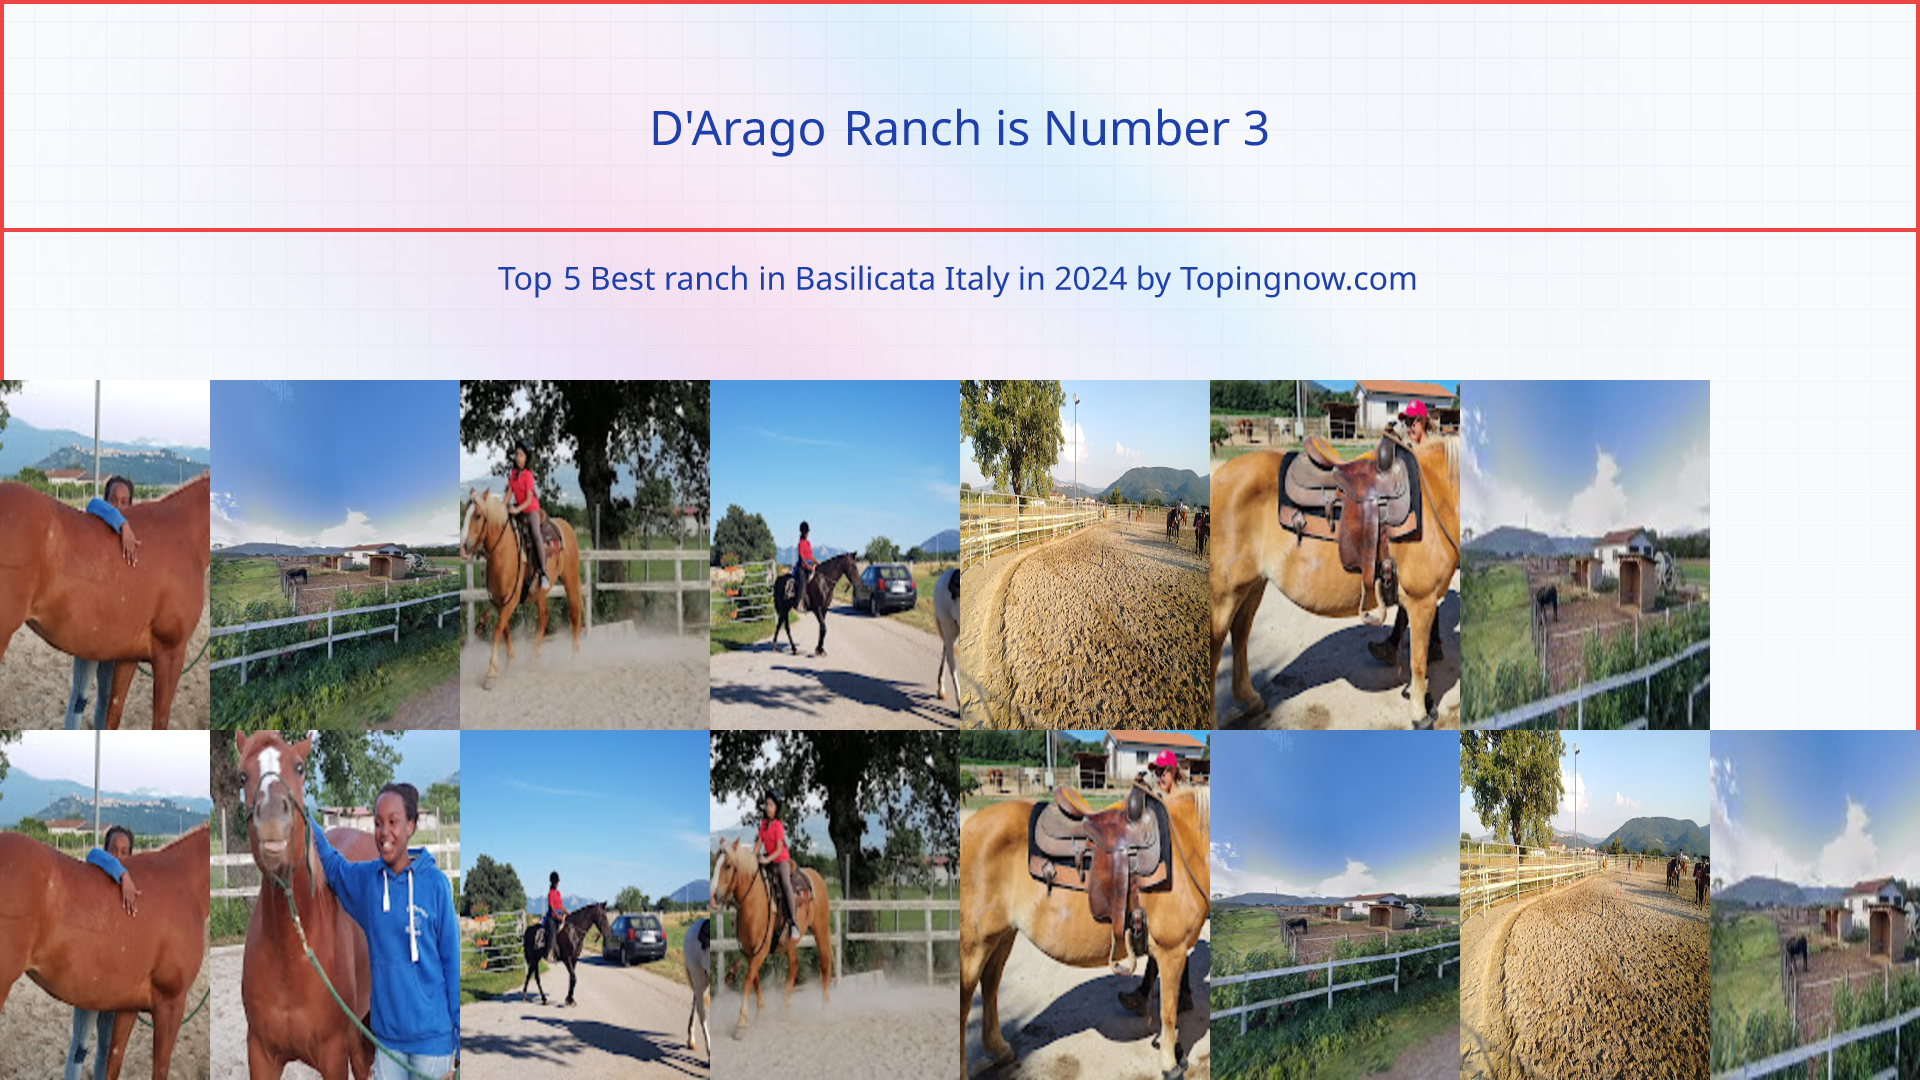 D'Arago Ranch: Top 5 Best ranch in Basilicata Italy in 2024